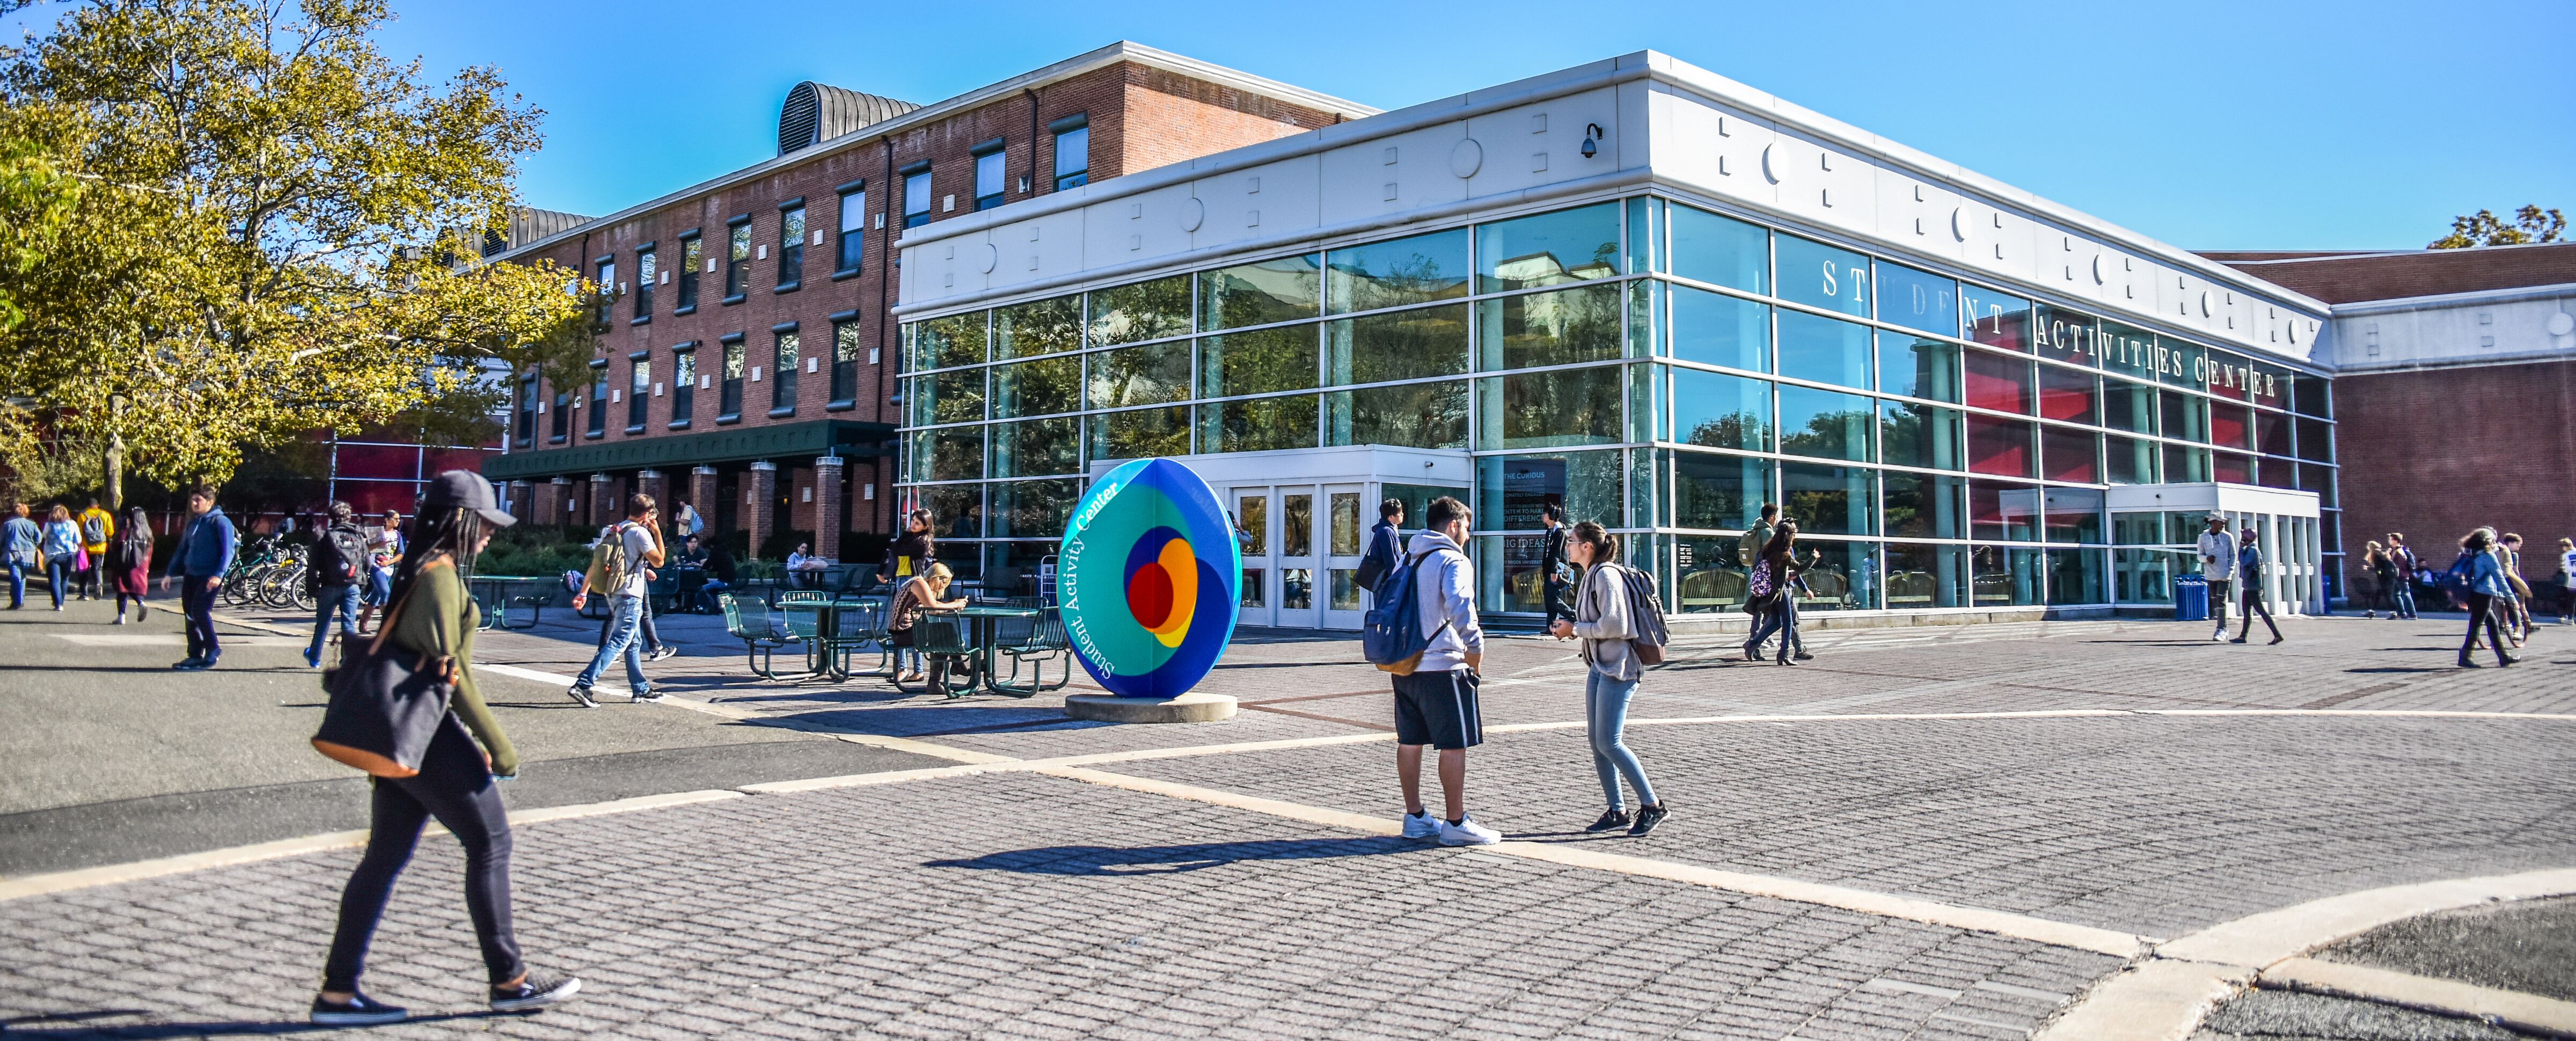 An exterior photo of Stony Brook University's Student Activities Center